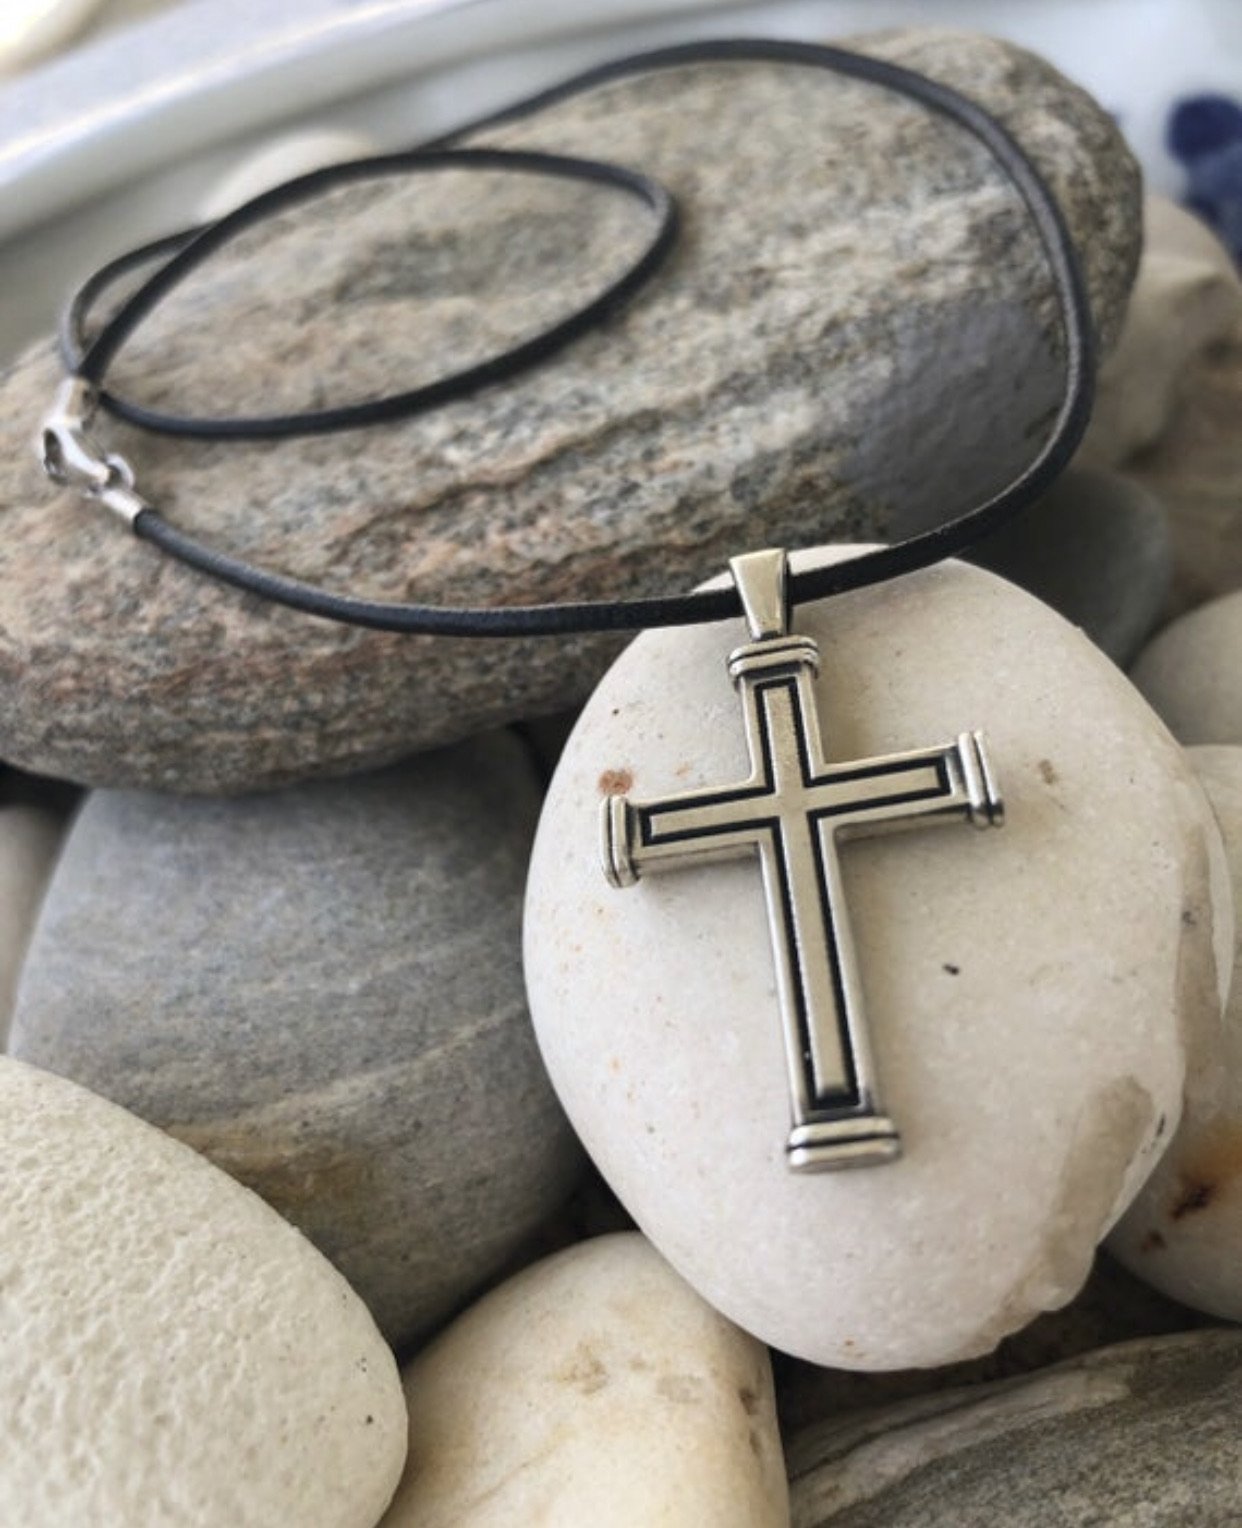 Men's cross necklace, cross leather cord, oxidized silver cross pendant 